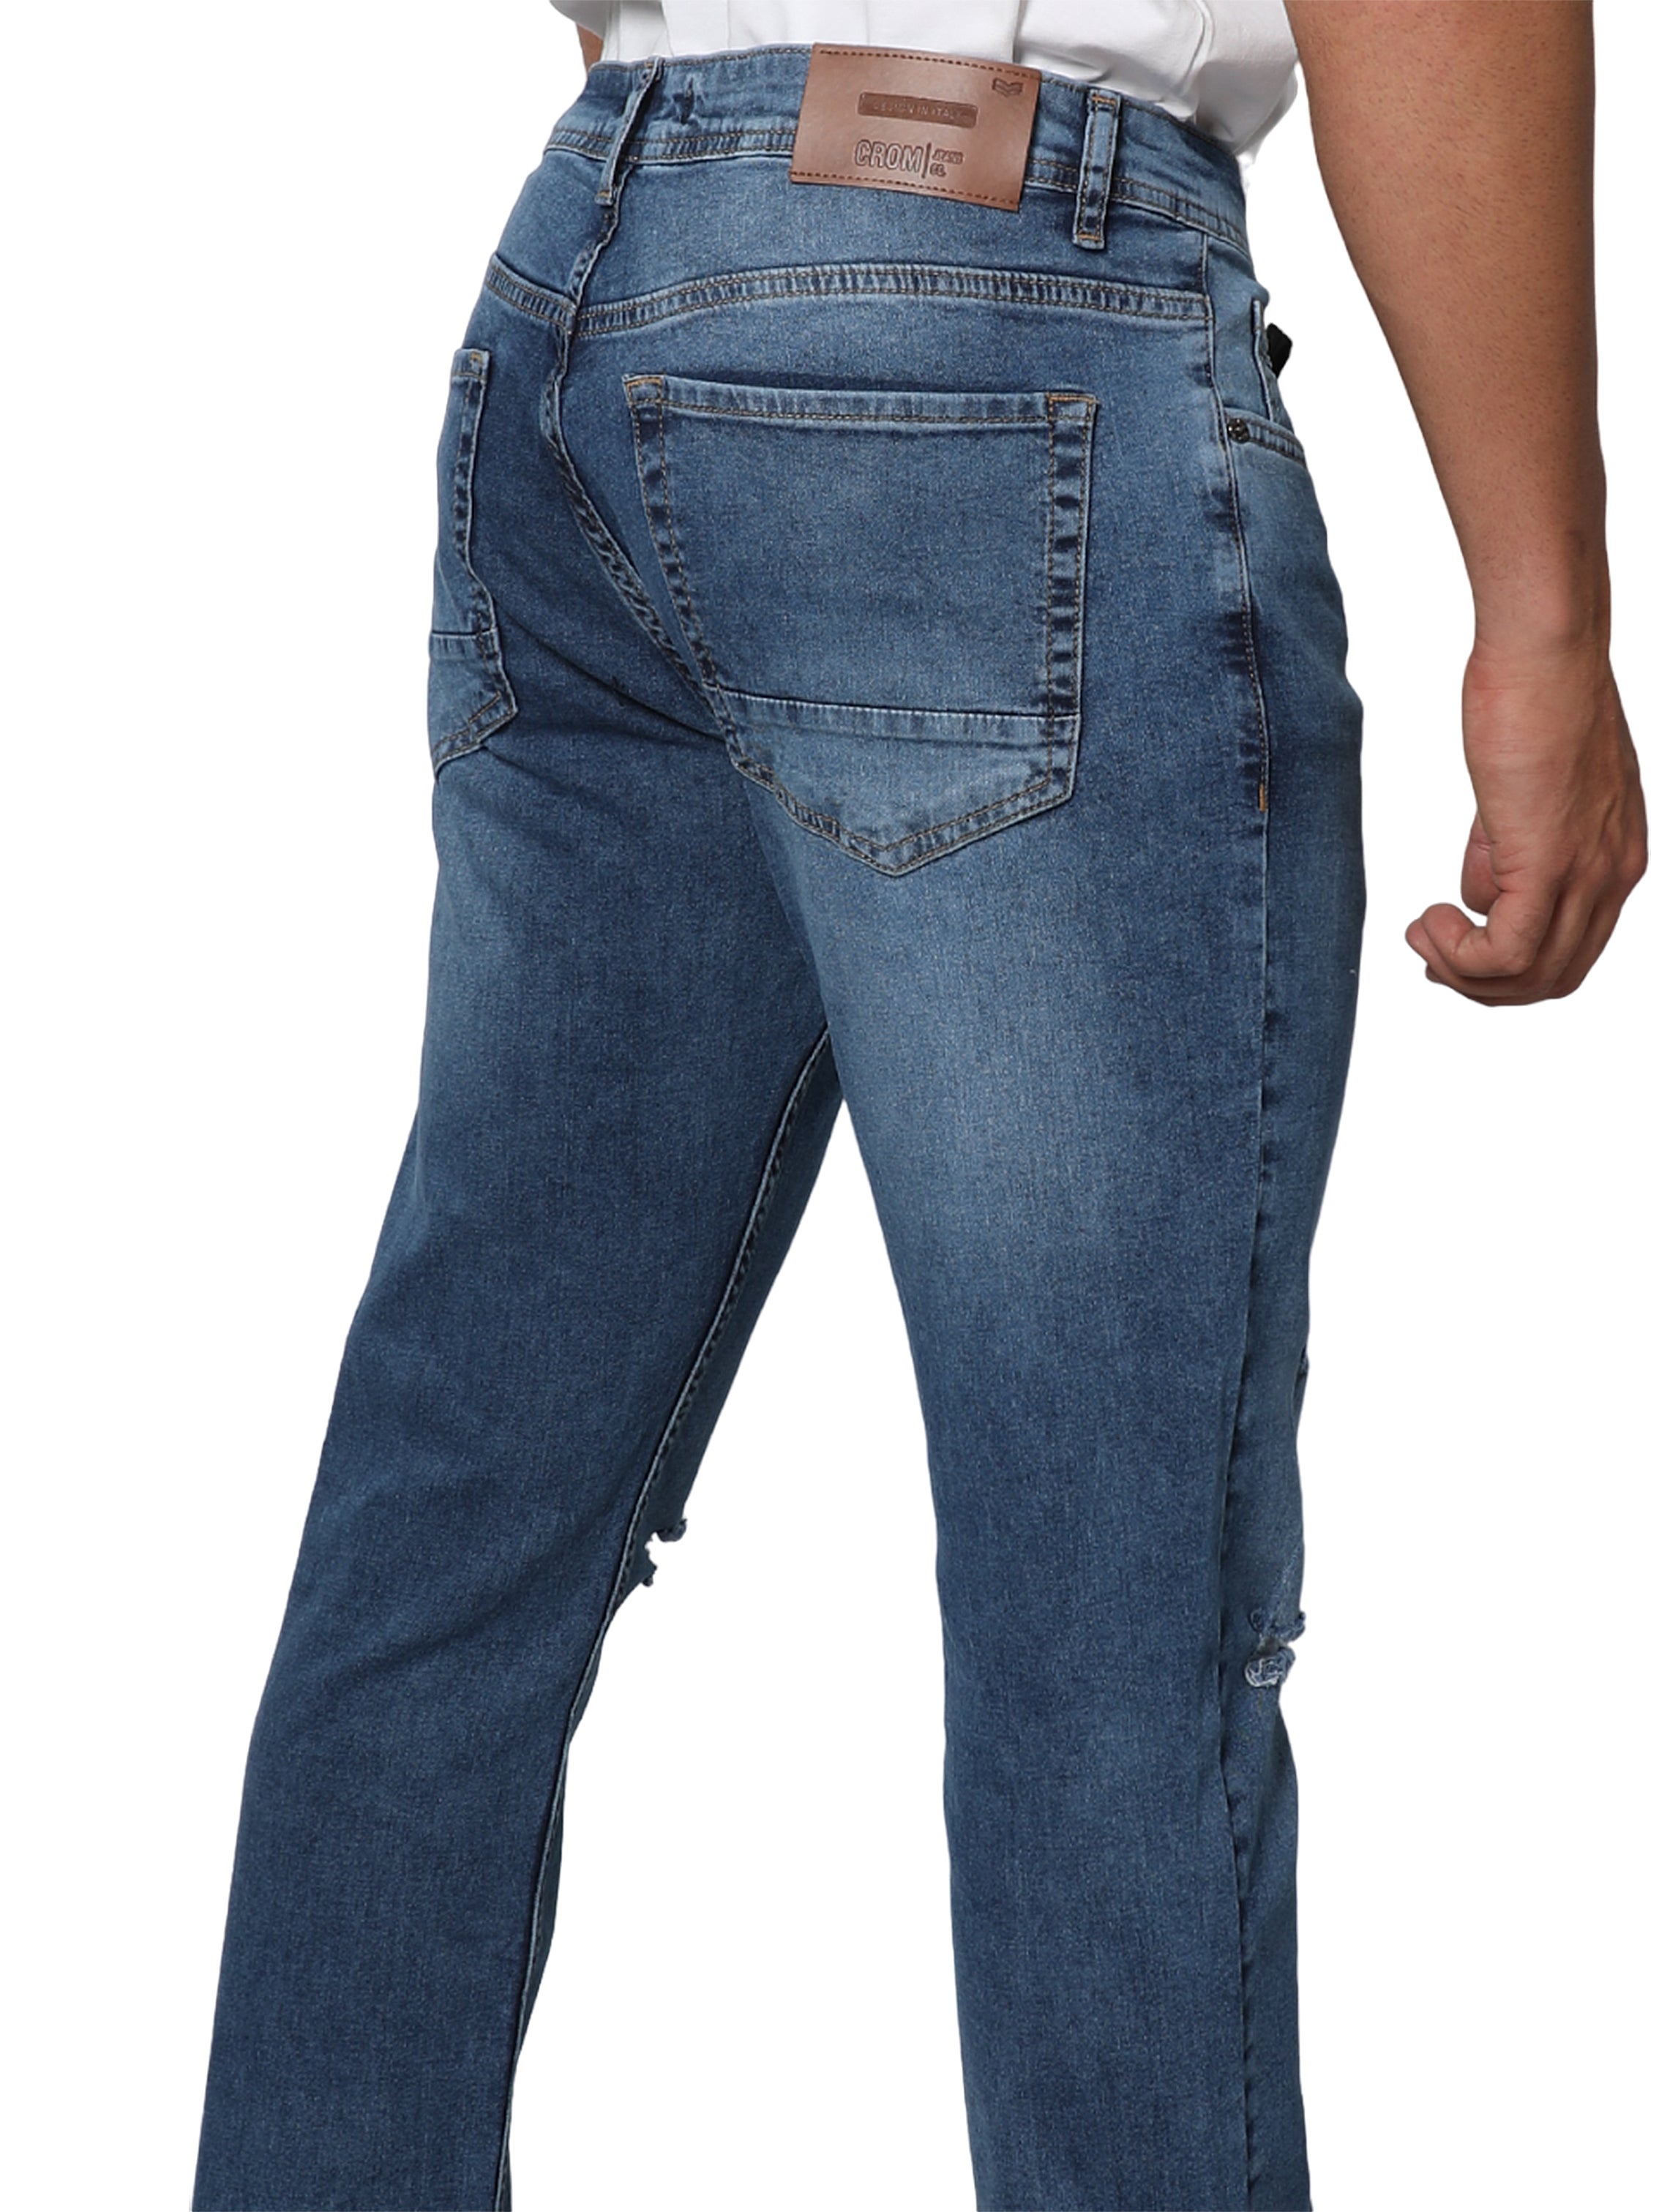 Men Skinny Denim Jeans With Ripped Design